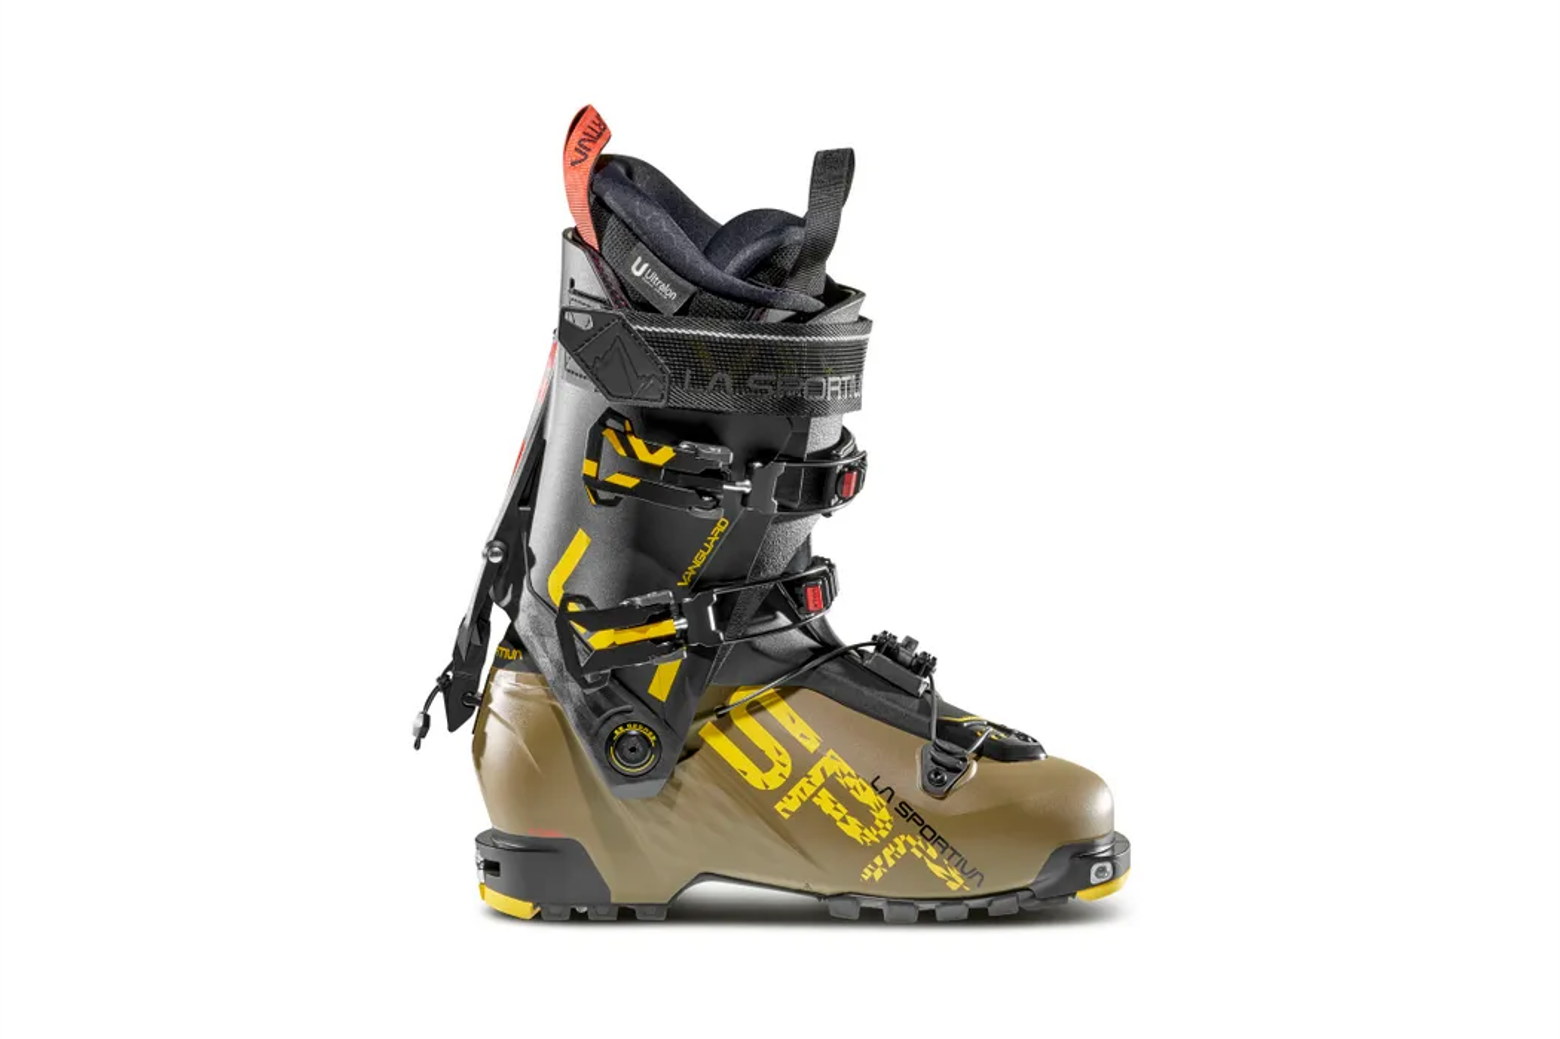 High performance ski boot from La Sportiva using Pebax materials